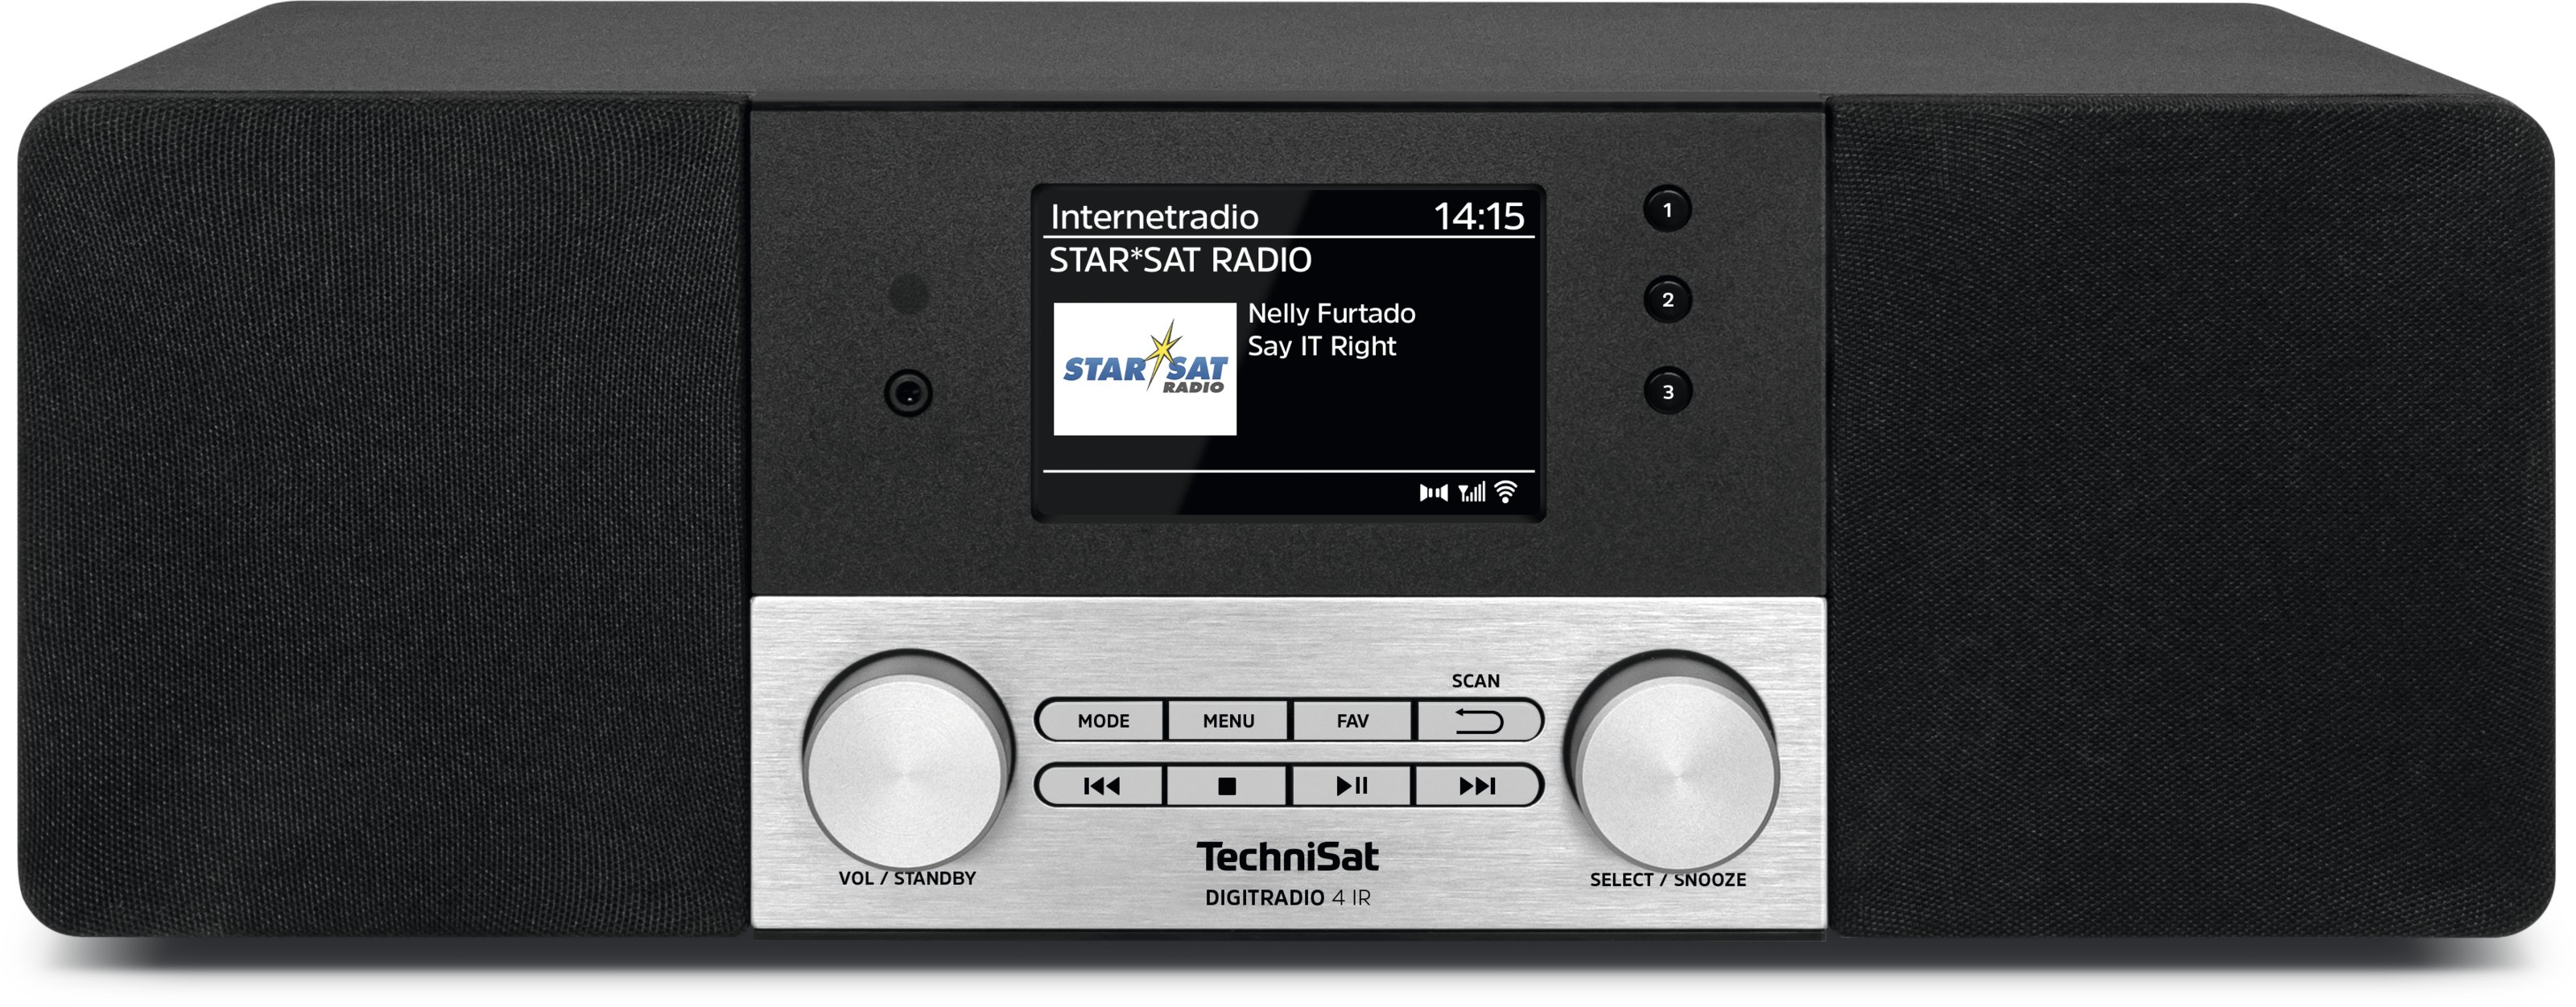 Buy Technisat DigitRadio 4 IR - High Quality Radio at